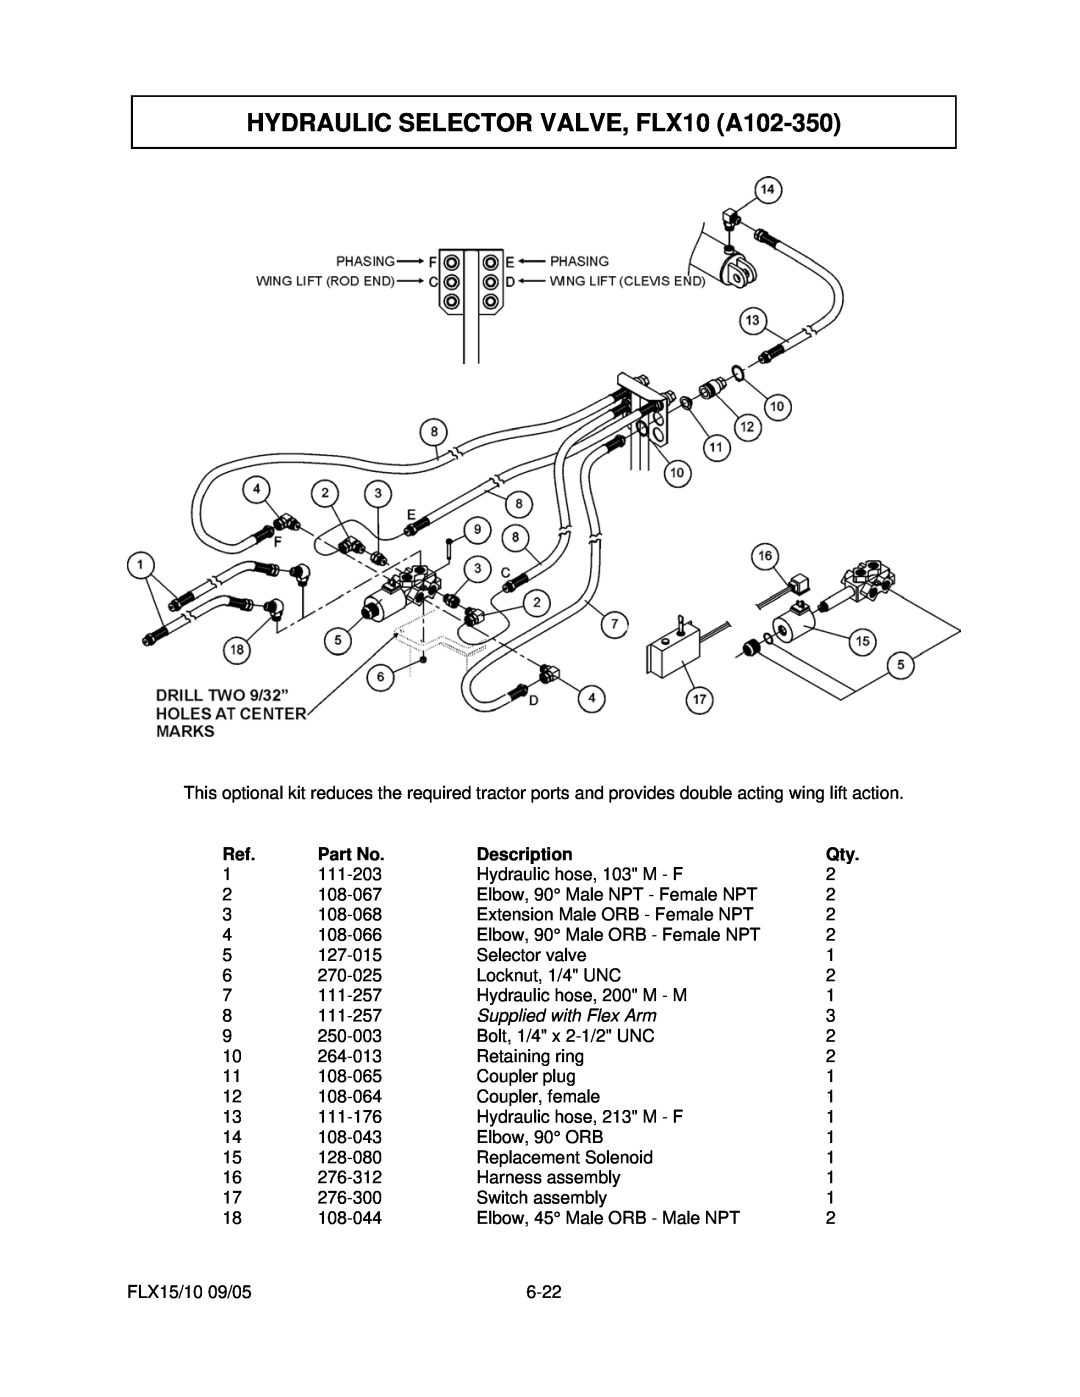 Tiger Mowers FLX15 manual HYDRAULIC SELECTOR VALVE, FLX10 A102-350, Description 